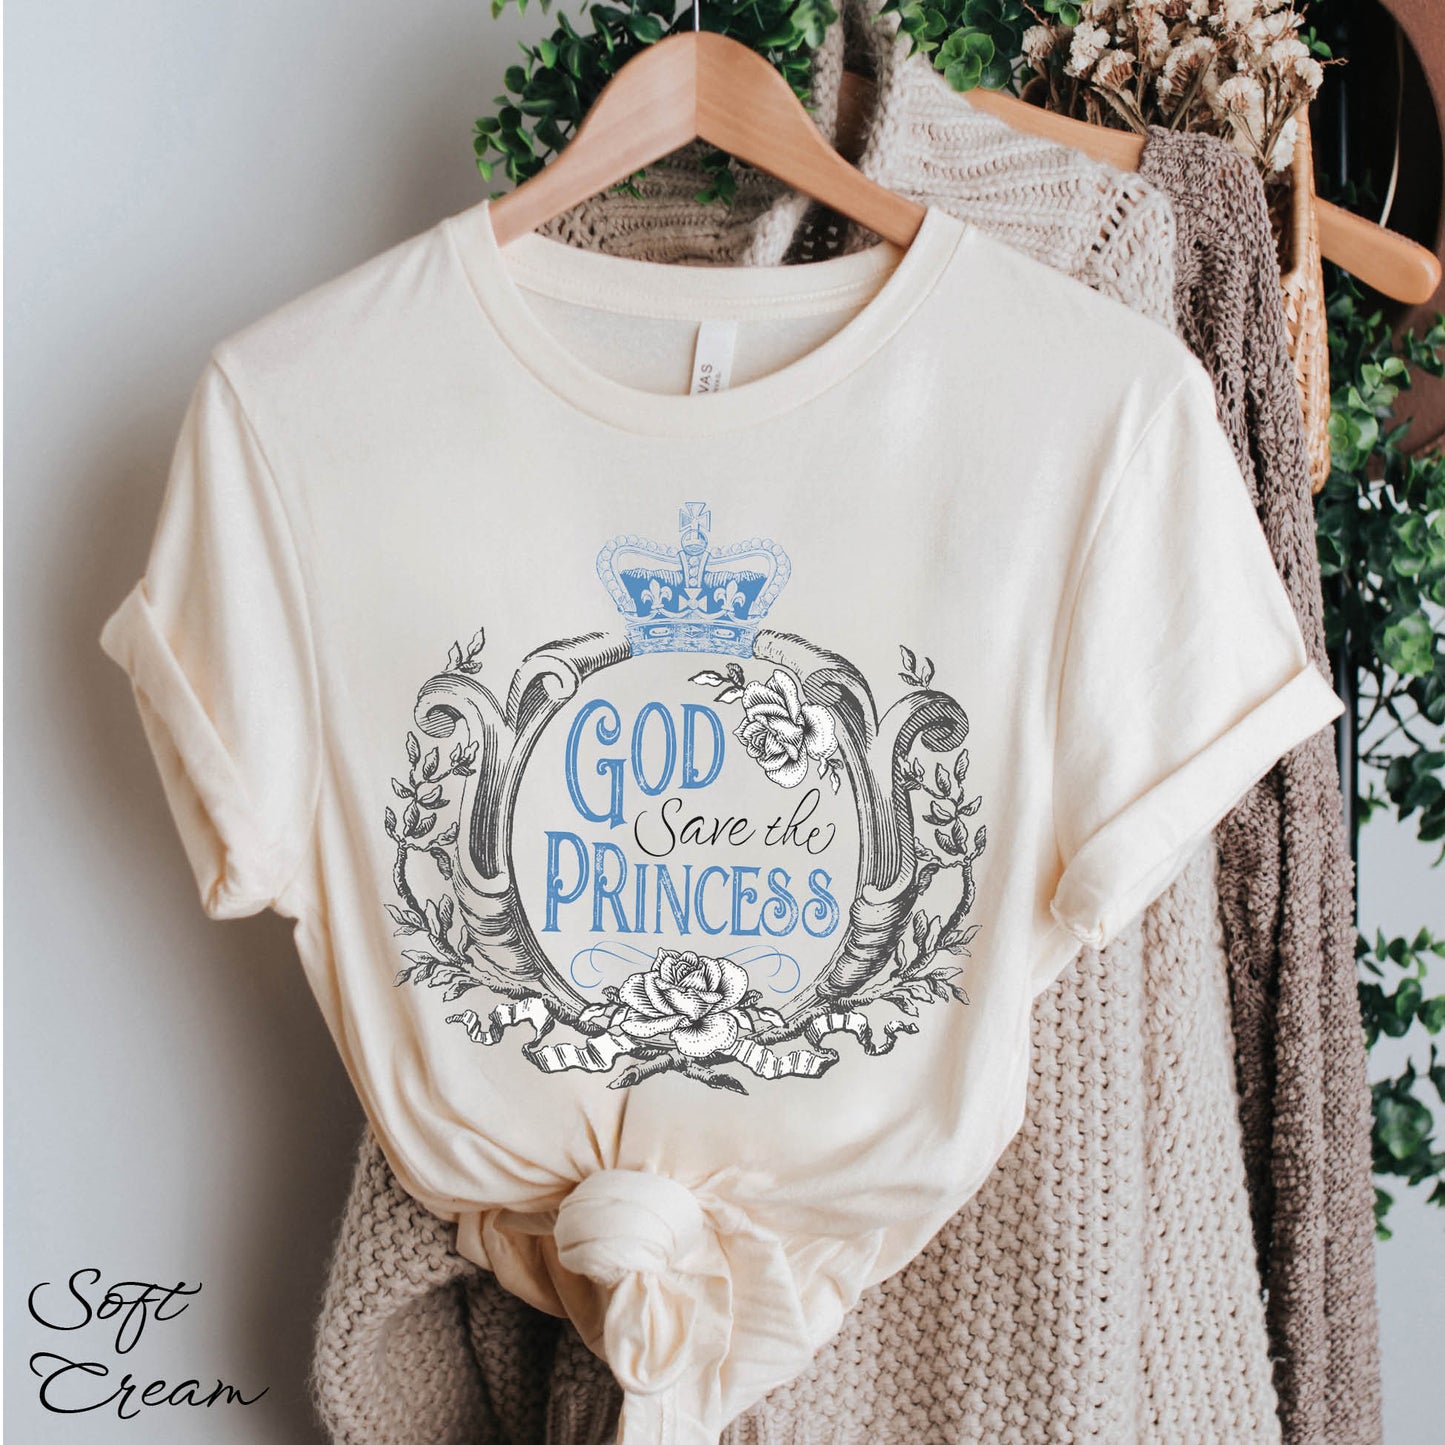 God Save the Princess of Wales Kate Middleton Prayer T-Shirt